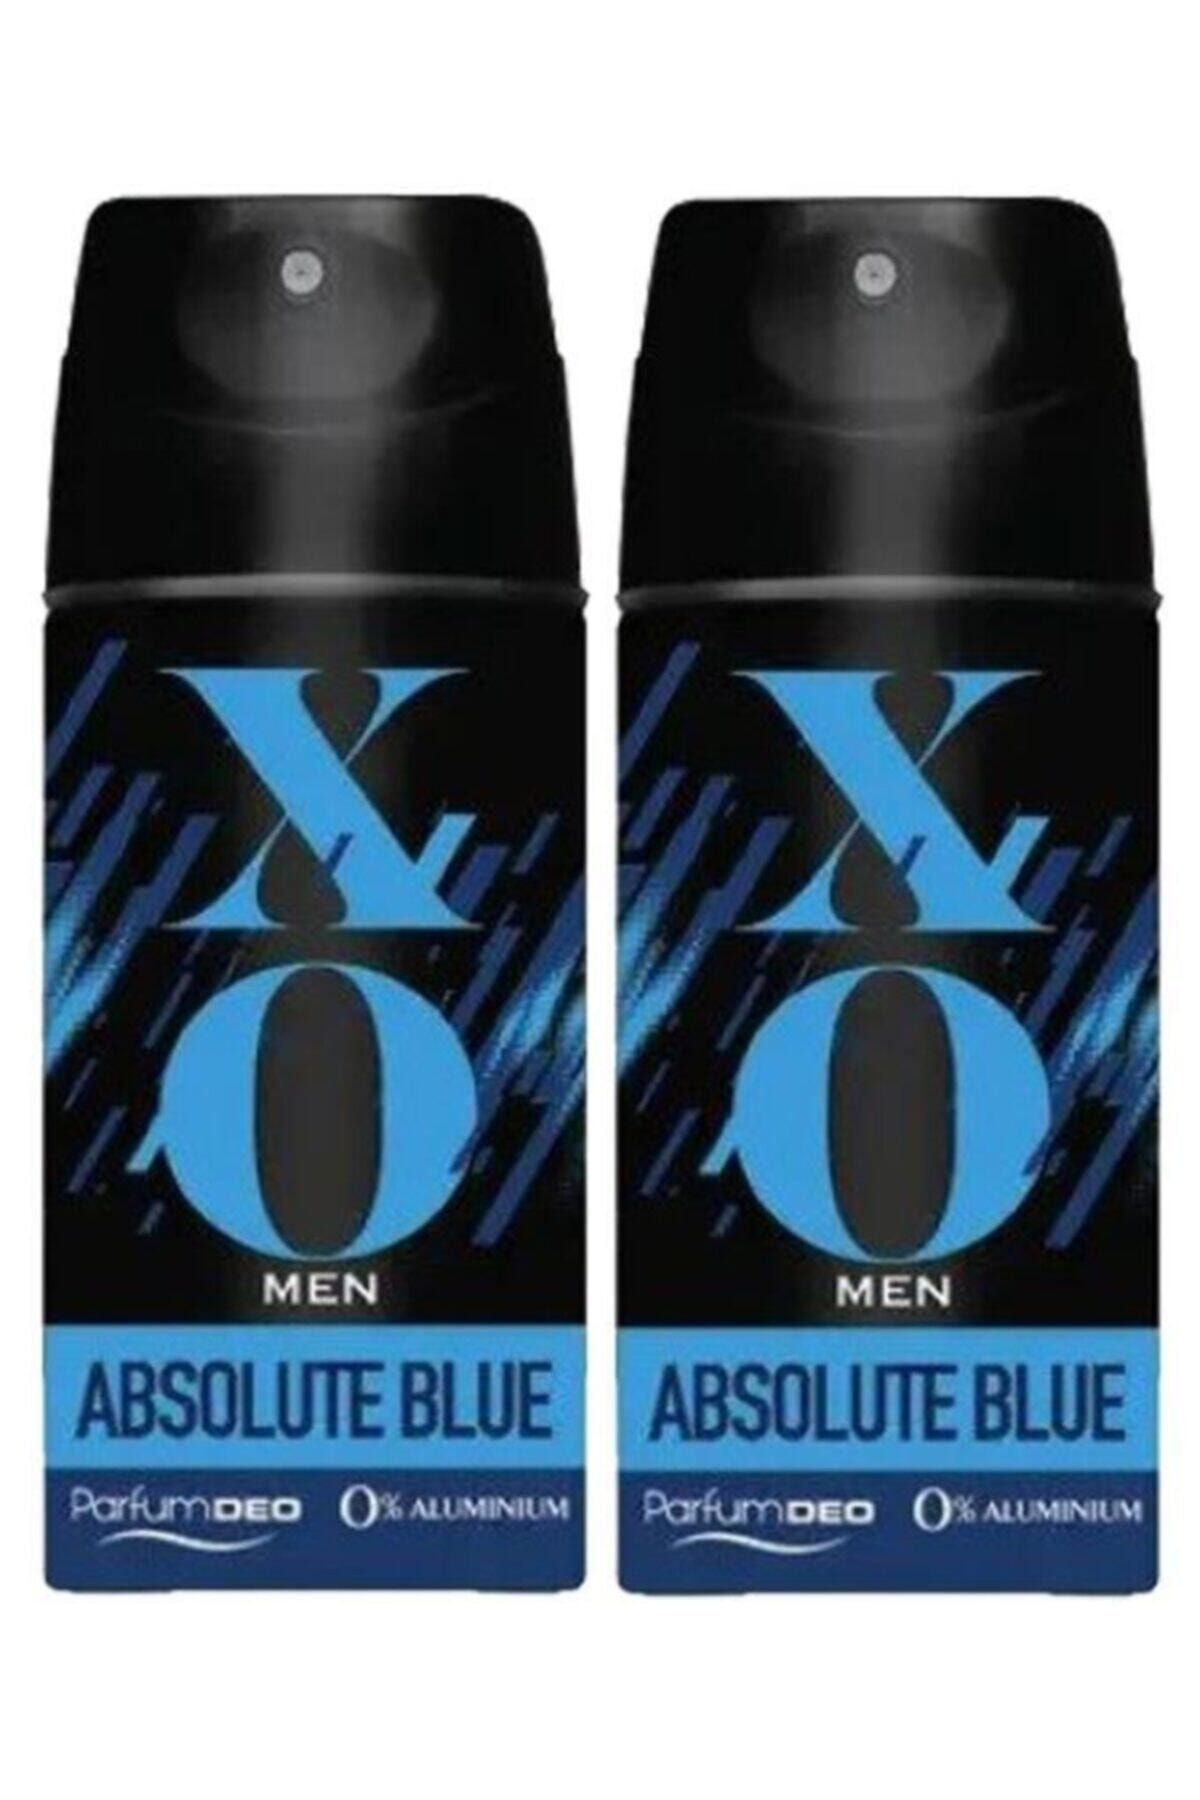 Xo Erkek Deodorant Absolute Blue 150 ml 2 Adet